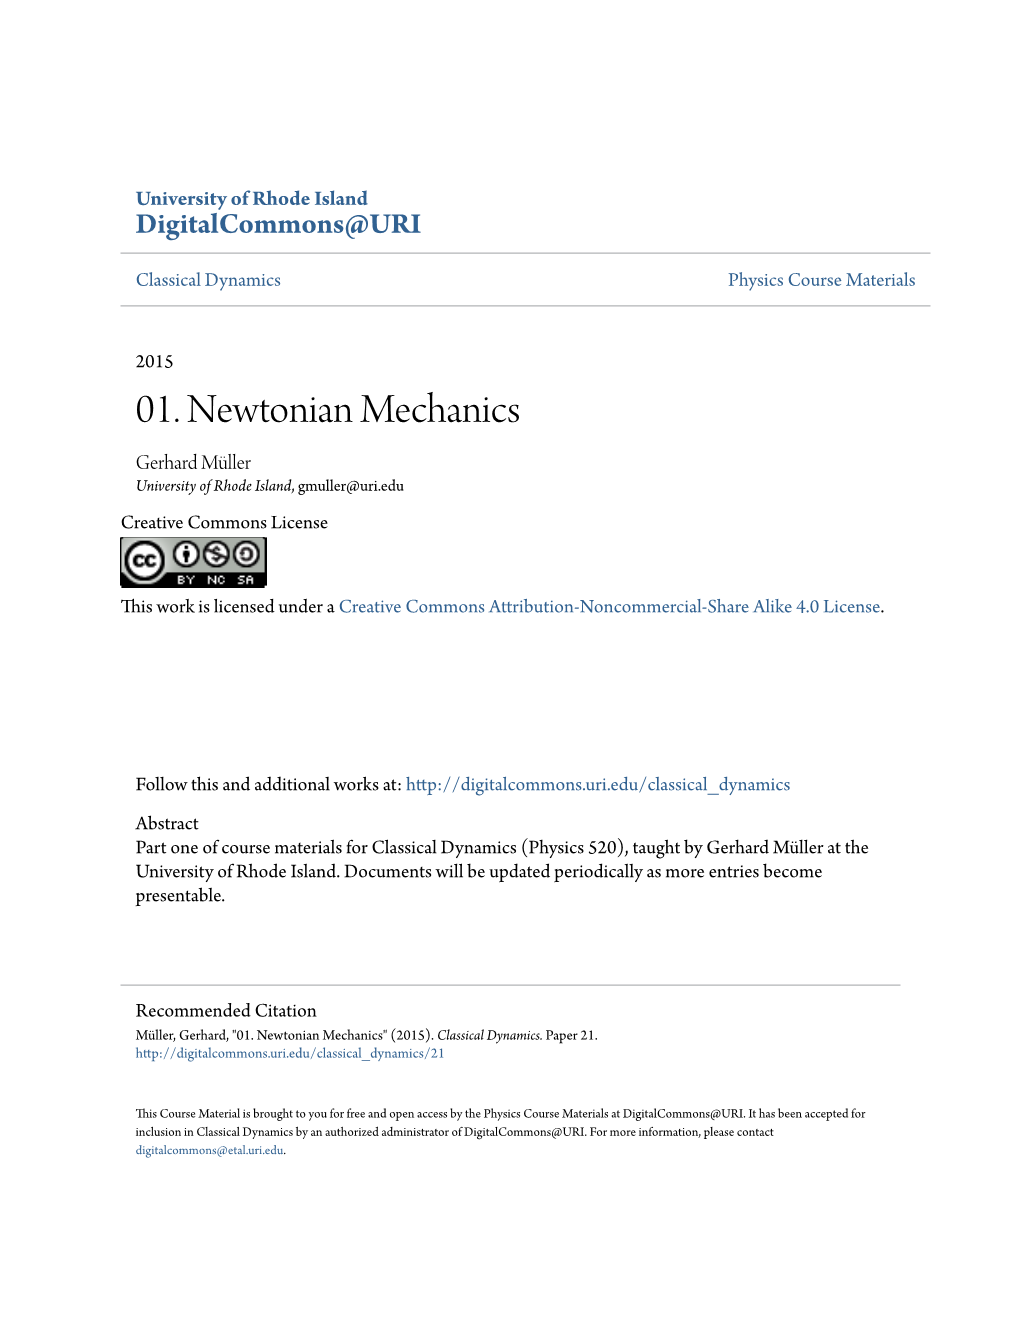 01. Newtonian Mechanics Gerhard Müller University of Rhode Island, Gmuller@Uri.Edu Creative Commons License